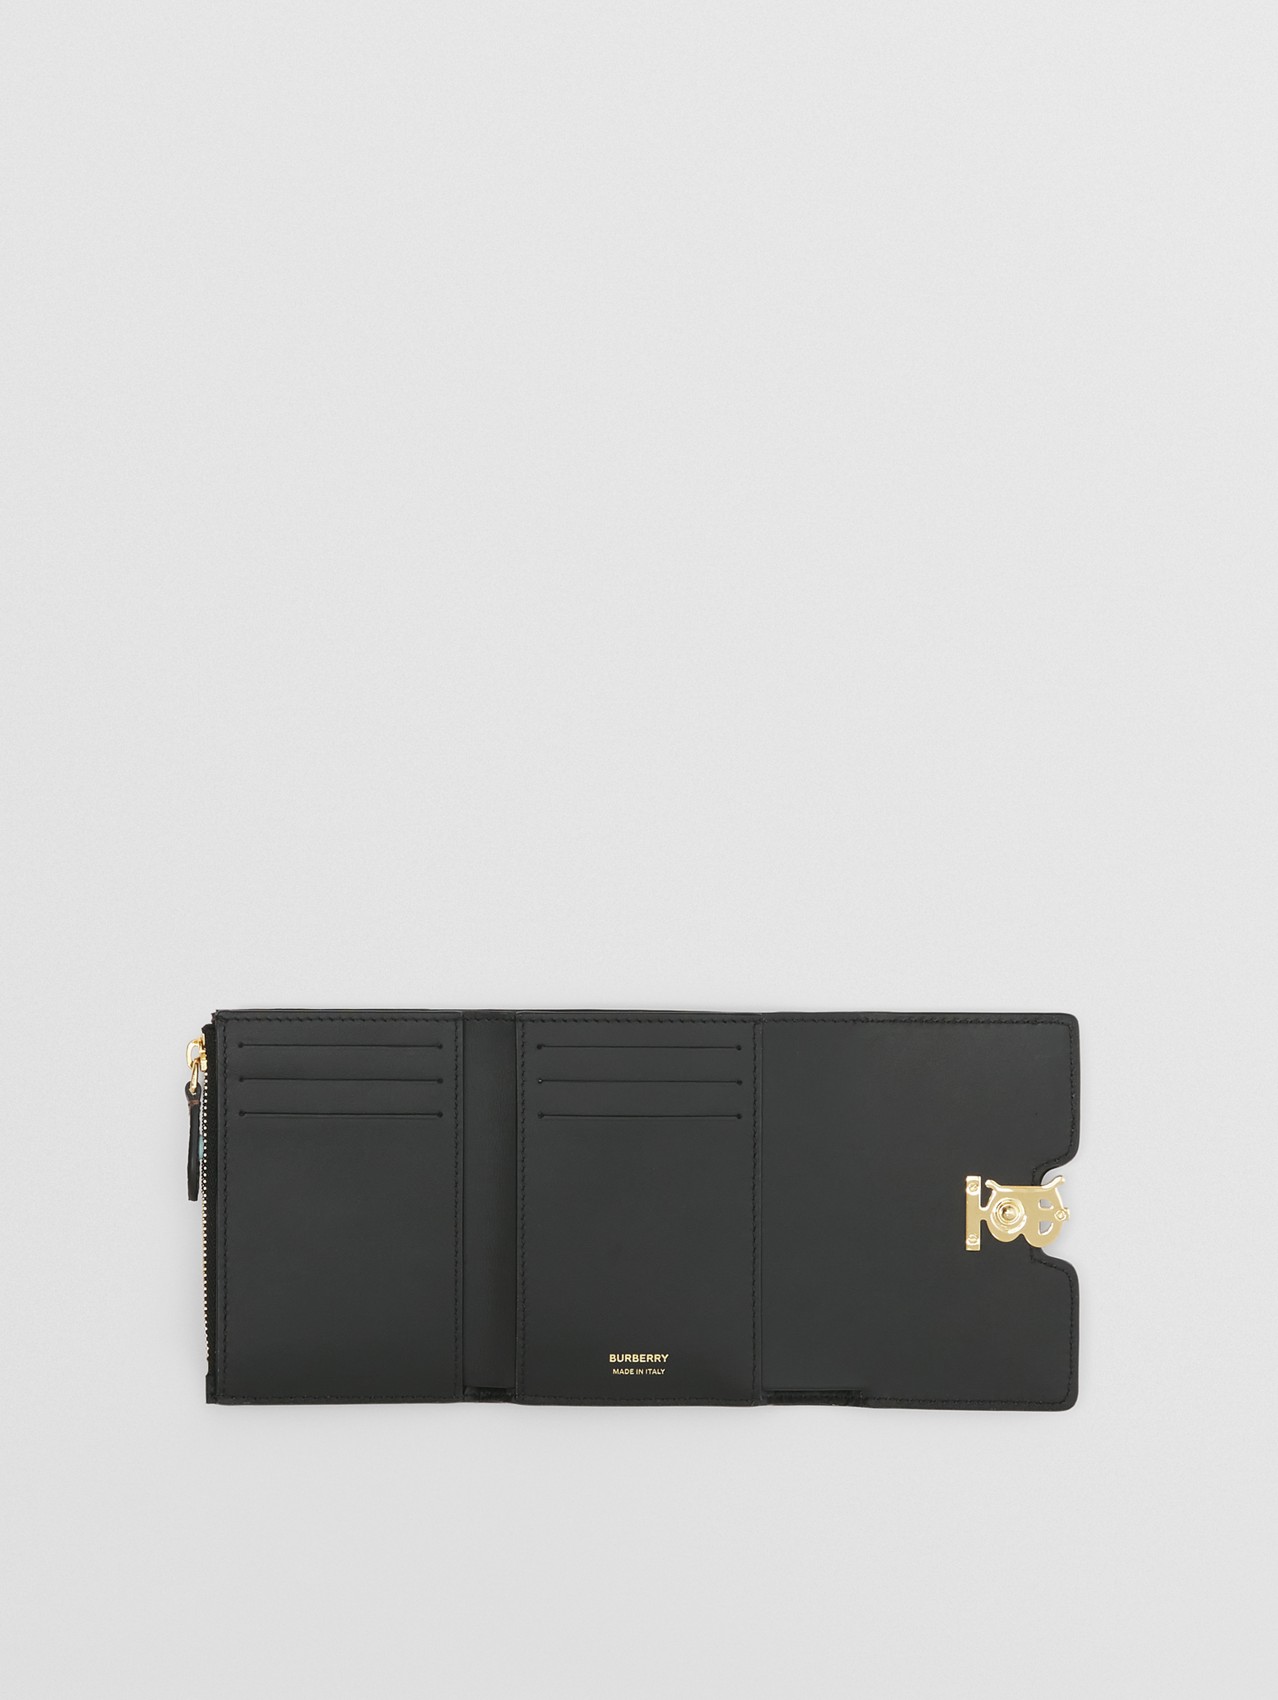 Monogram Motif Grainy Leather Folding Wallet in Black